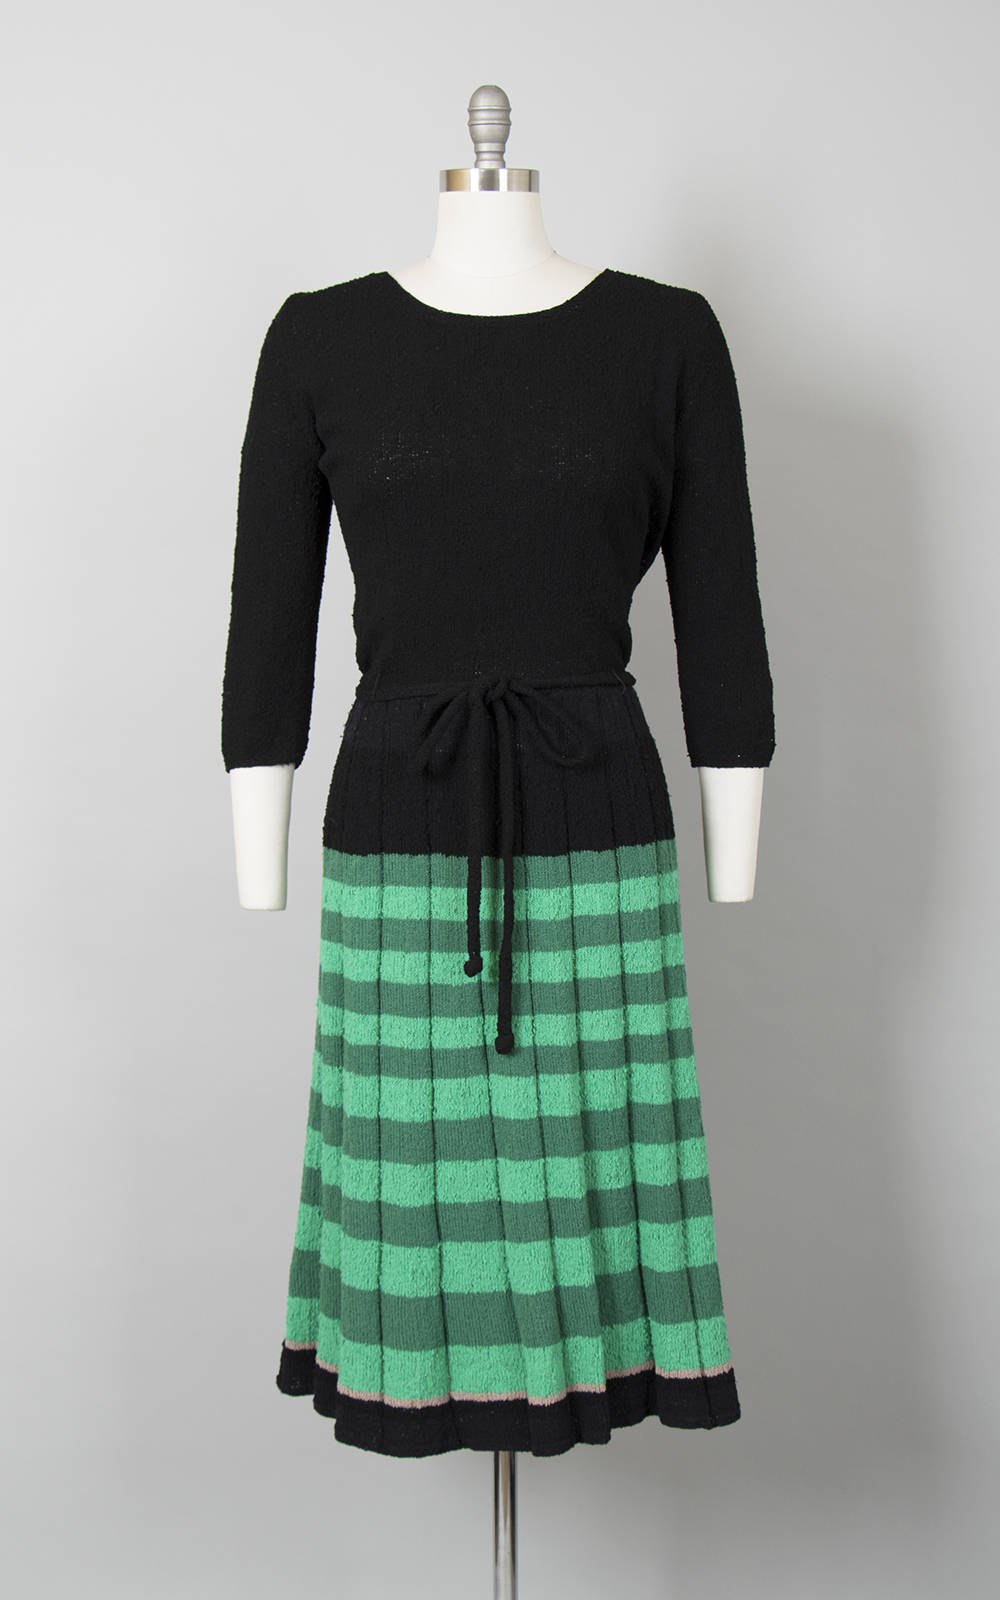 Vintage 1950s Dress | 50s Knit Bouclé Wool Dress Green Black Striped Sweater Dress with Belt (x-large)